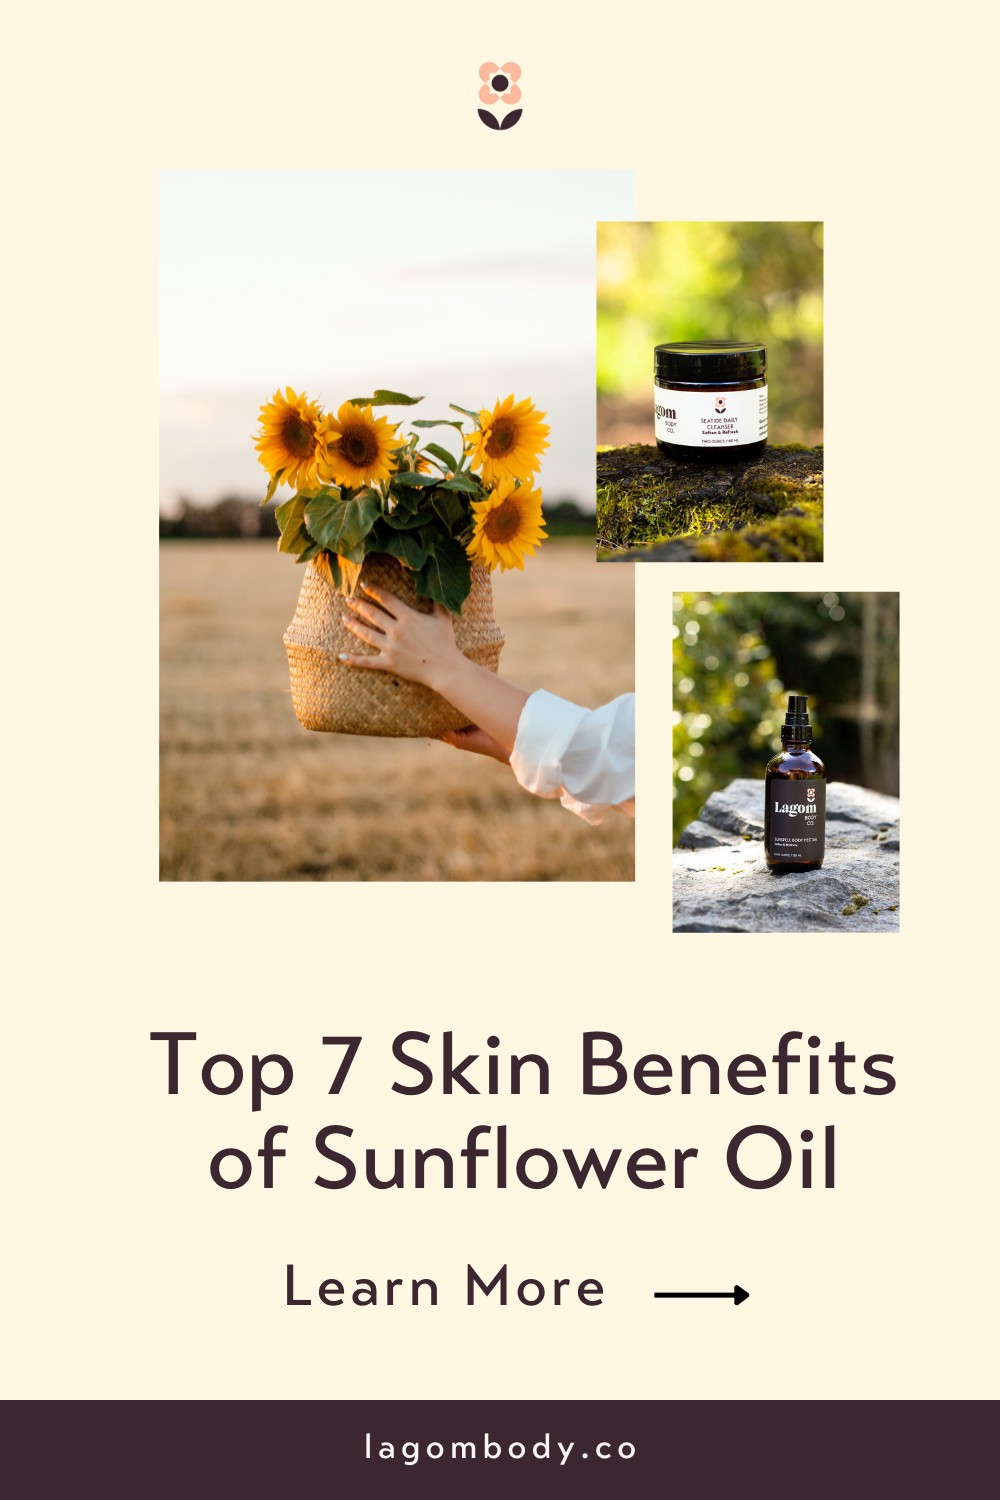 Top 7 Skin Benefits of Sunflower Oil